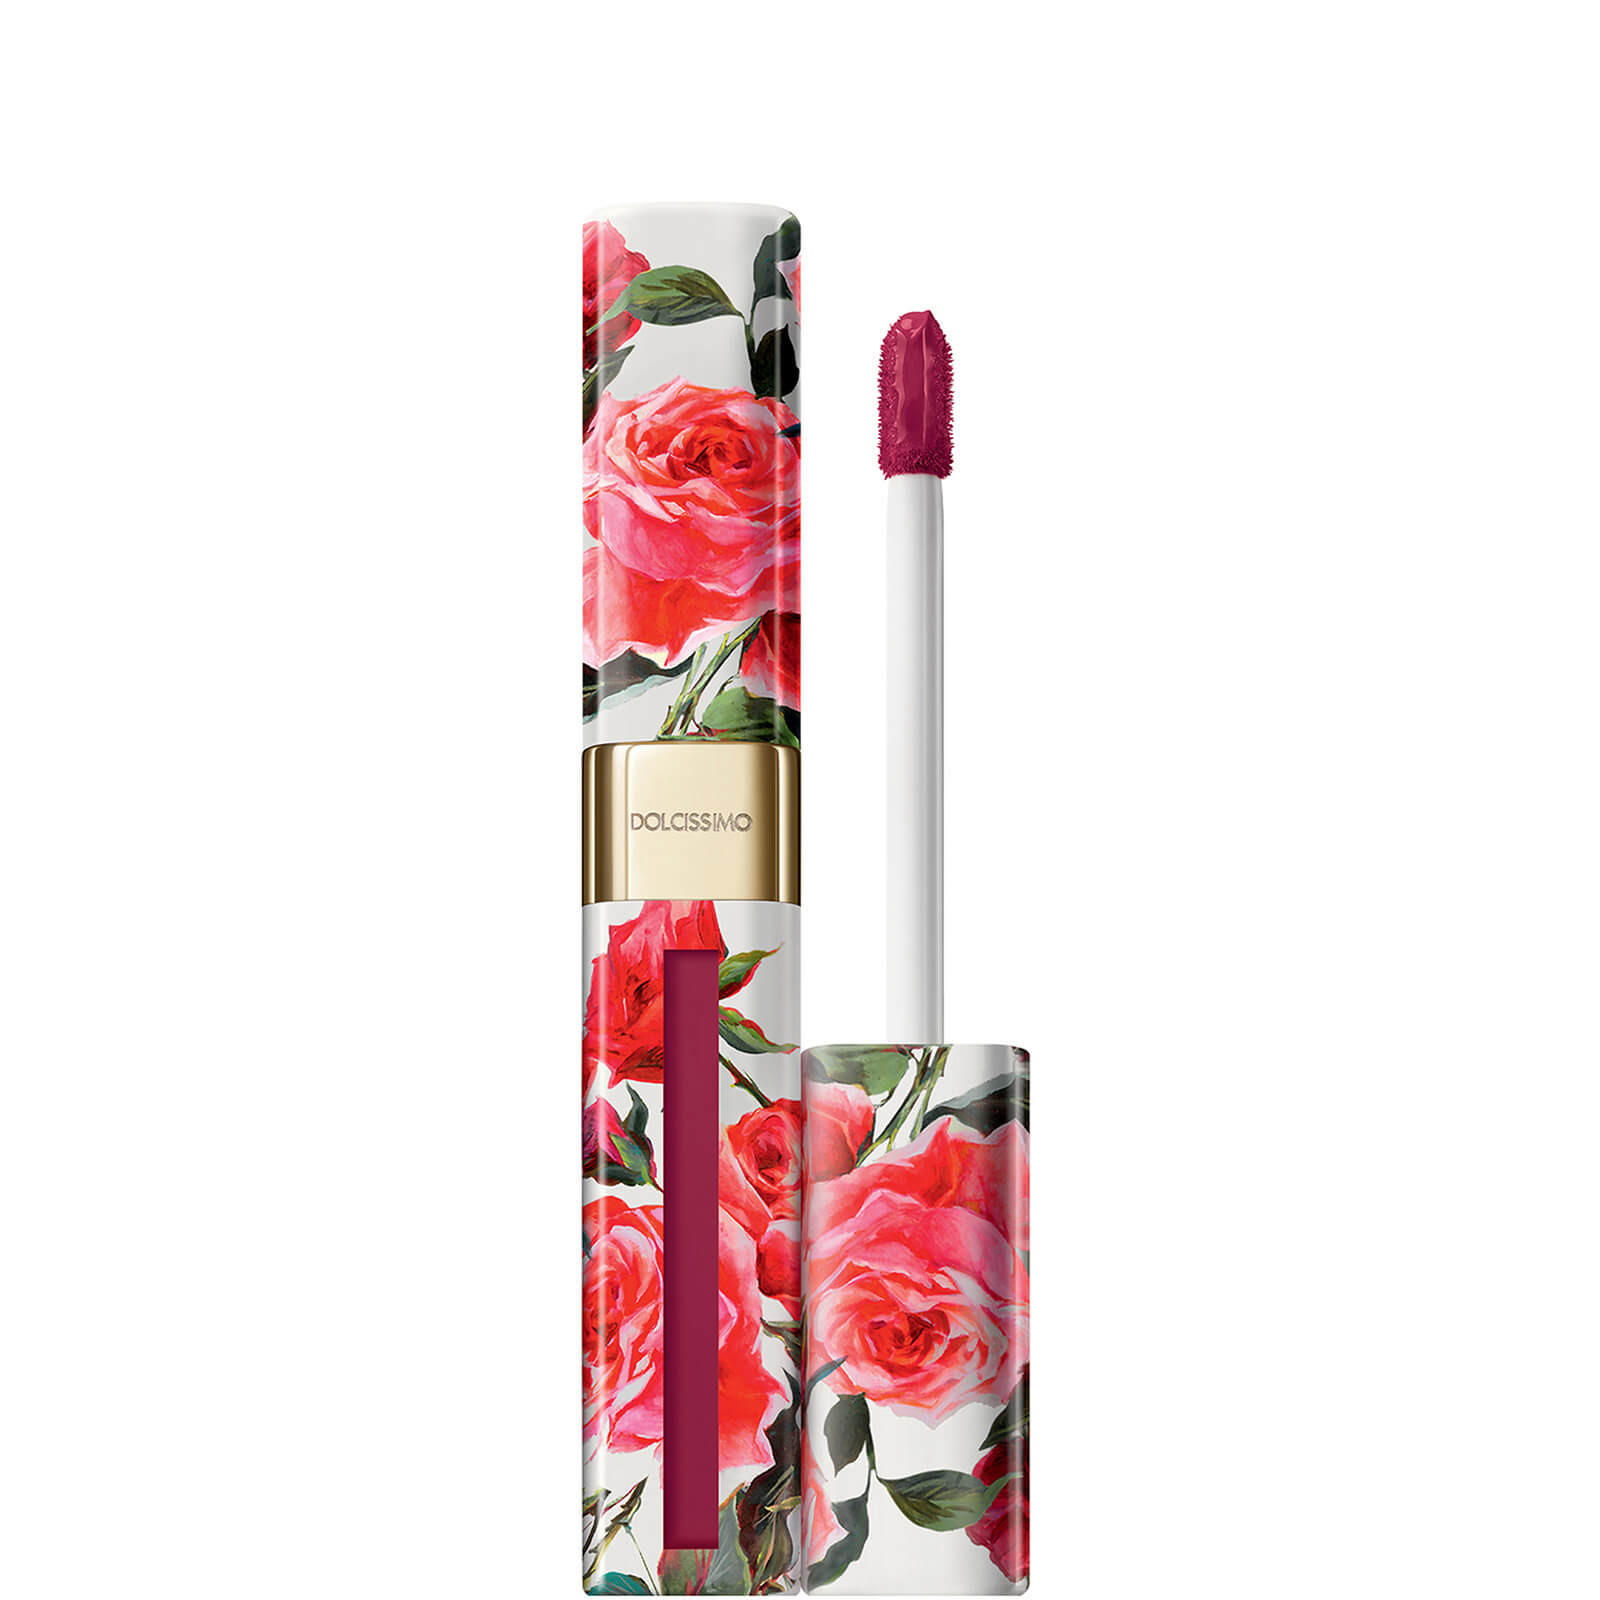 Dolce&Gabbana Dolcissimo Liquid Lipcolour 5ml (Various Shades) - Dahlia 11